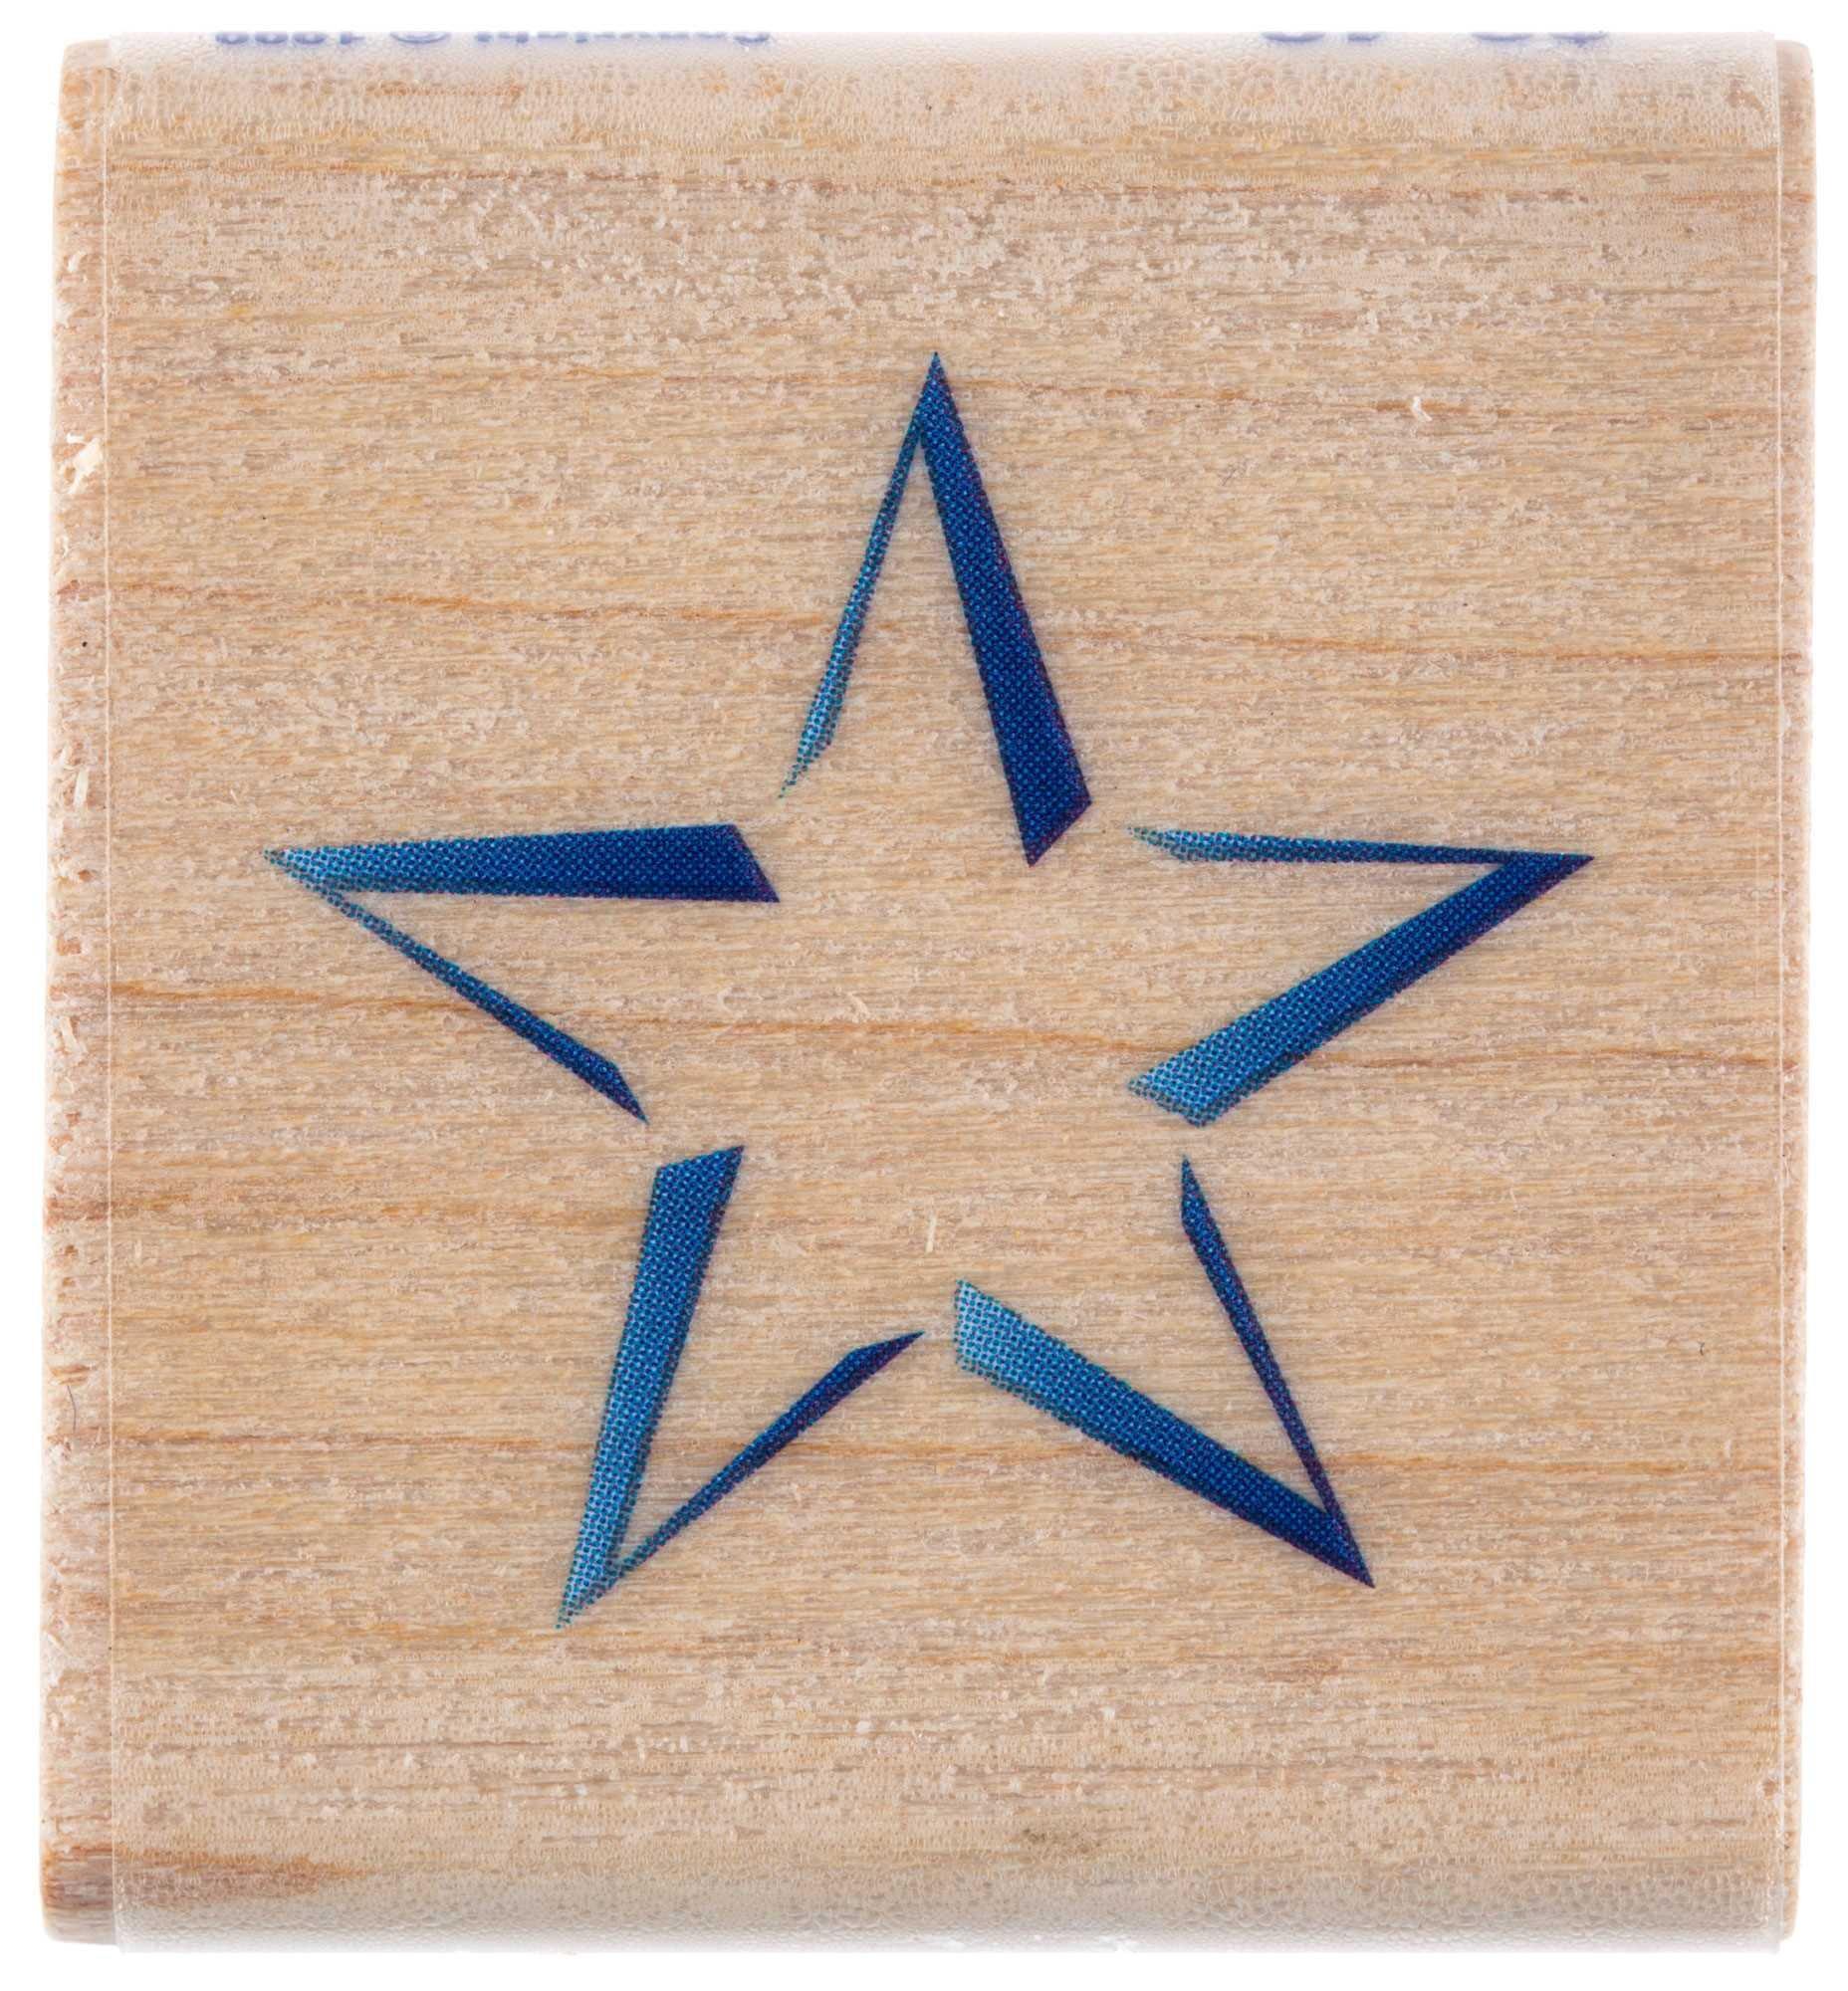 Round Solid Star Rubber Stamp